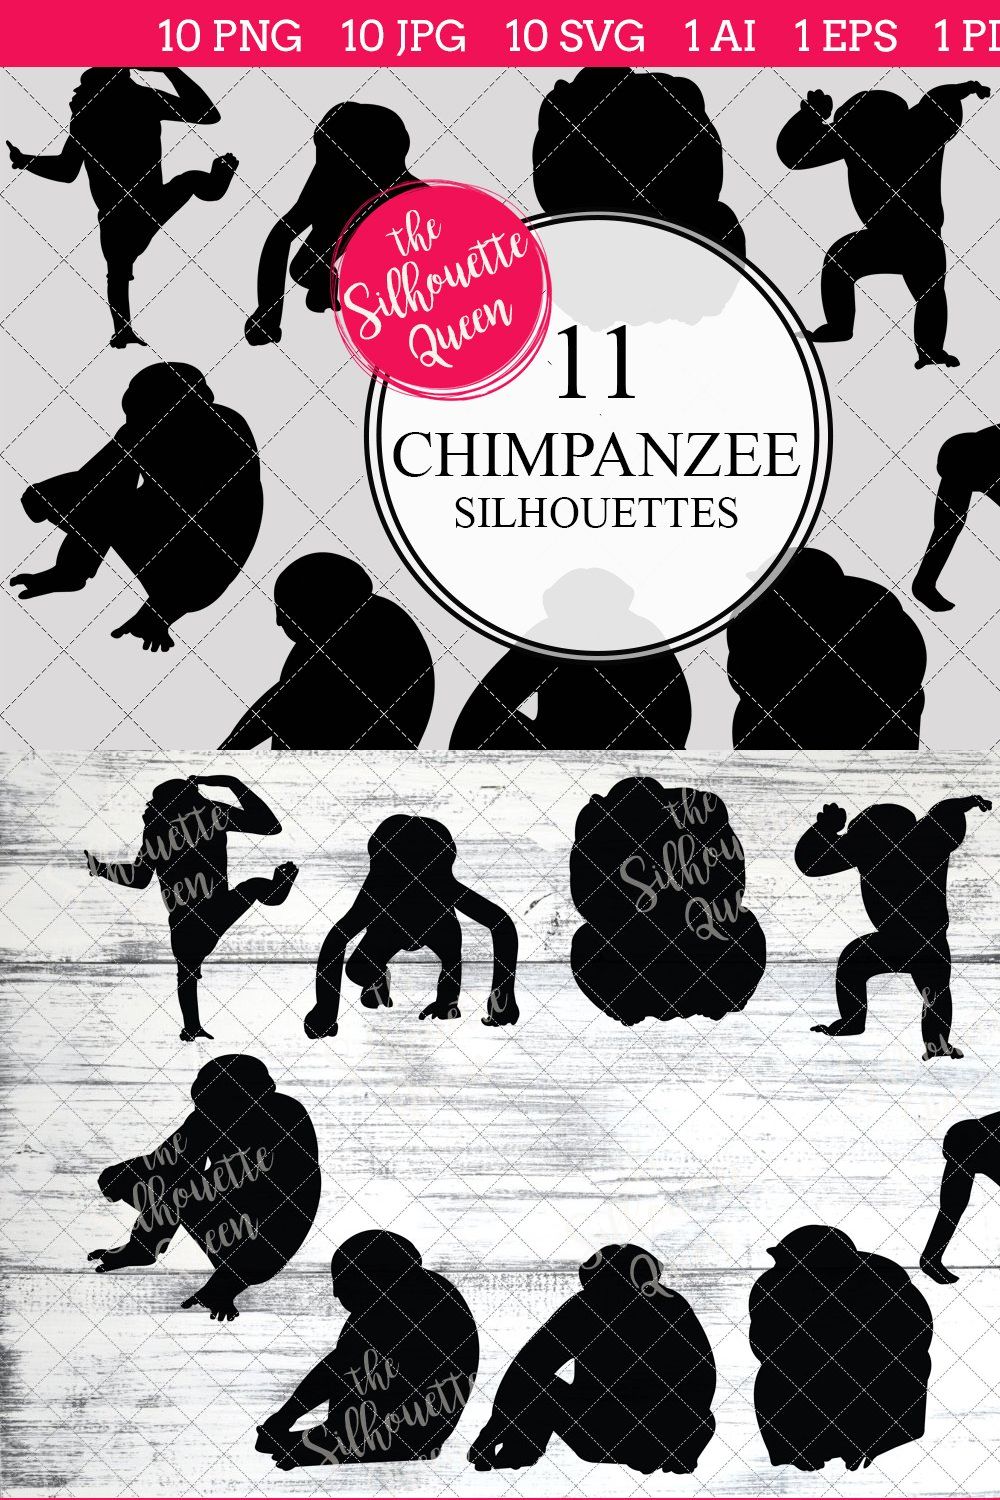 Chimpanzee Silhouette Clipart Clip pinterest preview image.